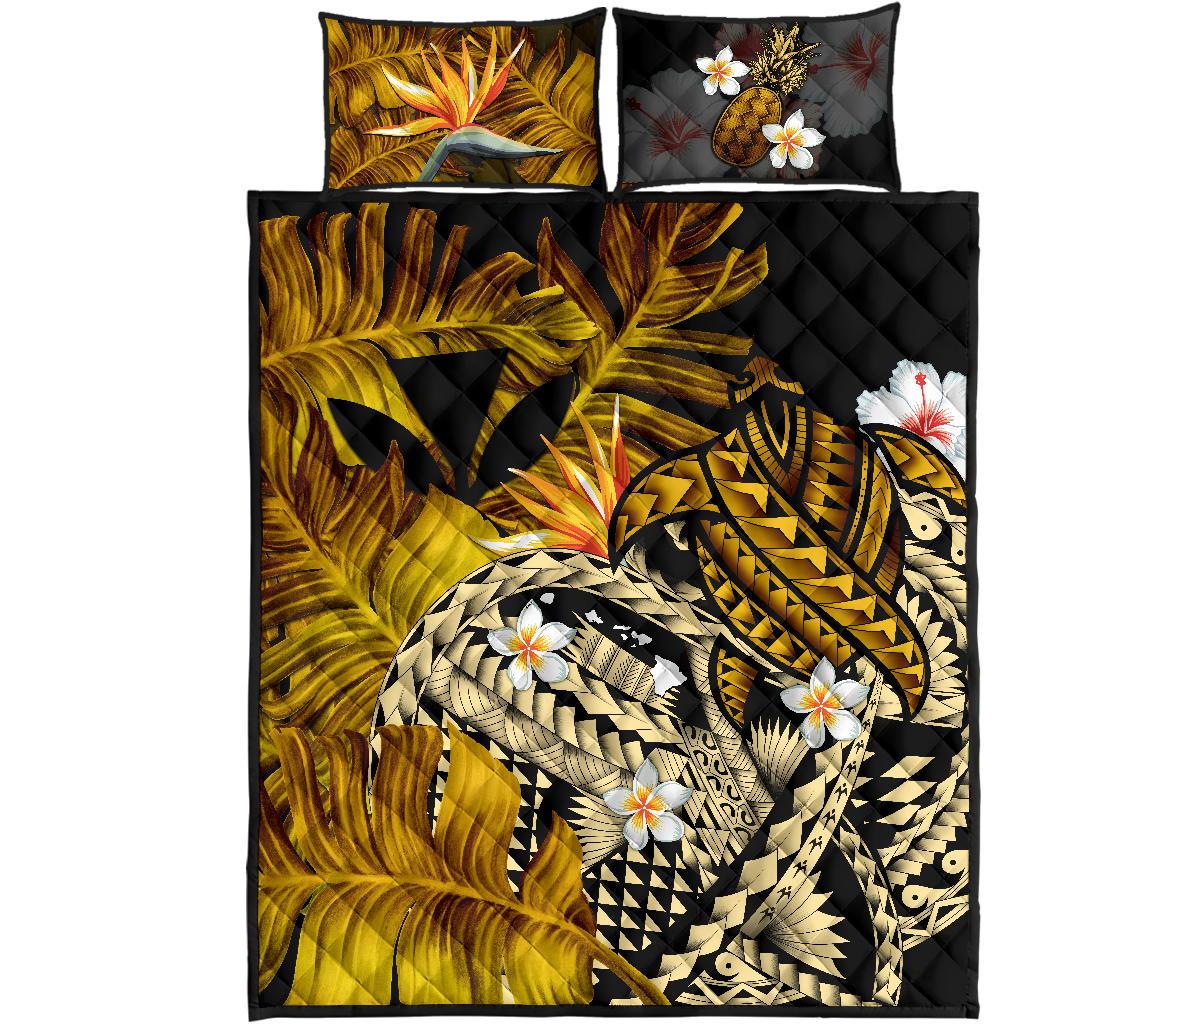 Kanaka Maoli (Hawaiian) Quilt Bed Set, Polynesian Pineapple Banana Leaves Turtle Tattoo Yellow Yellow - Polynesian Pride